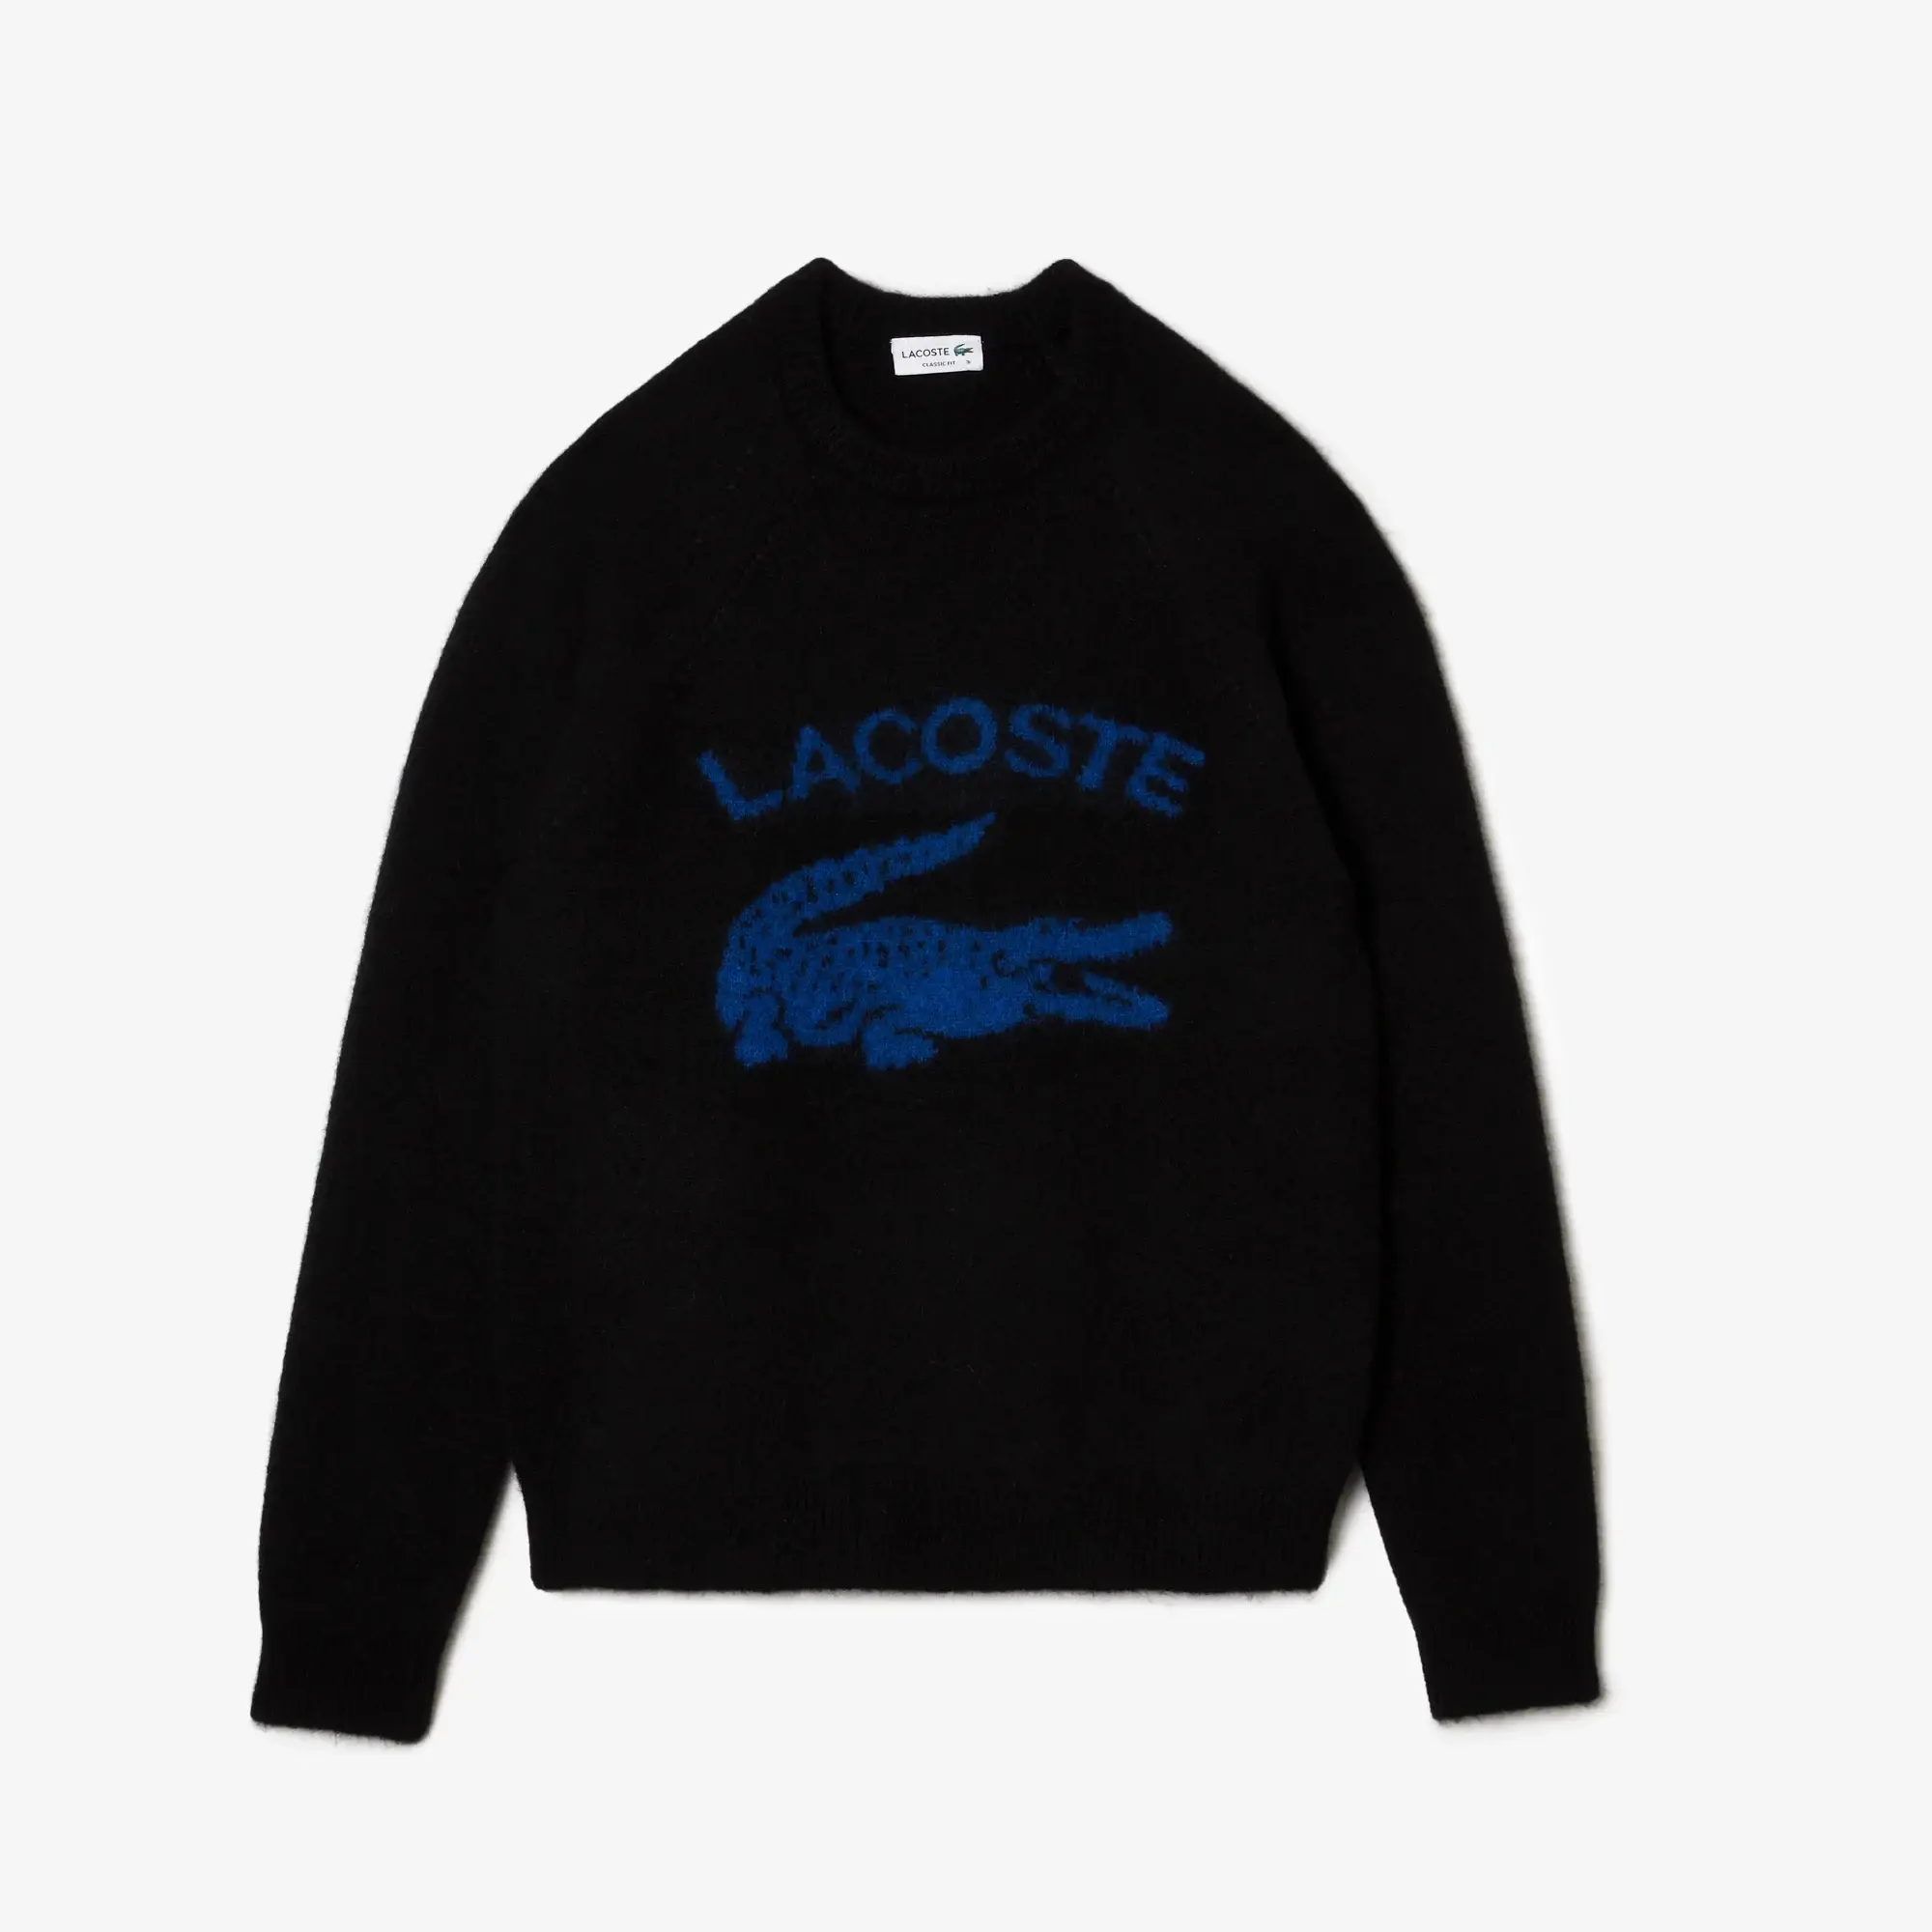 Lacoste Men's Branded Contrast Croc Alpaca Blend Sweater. 2